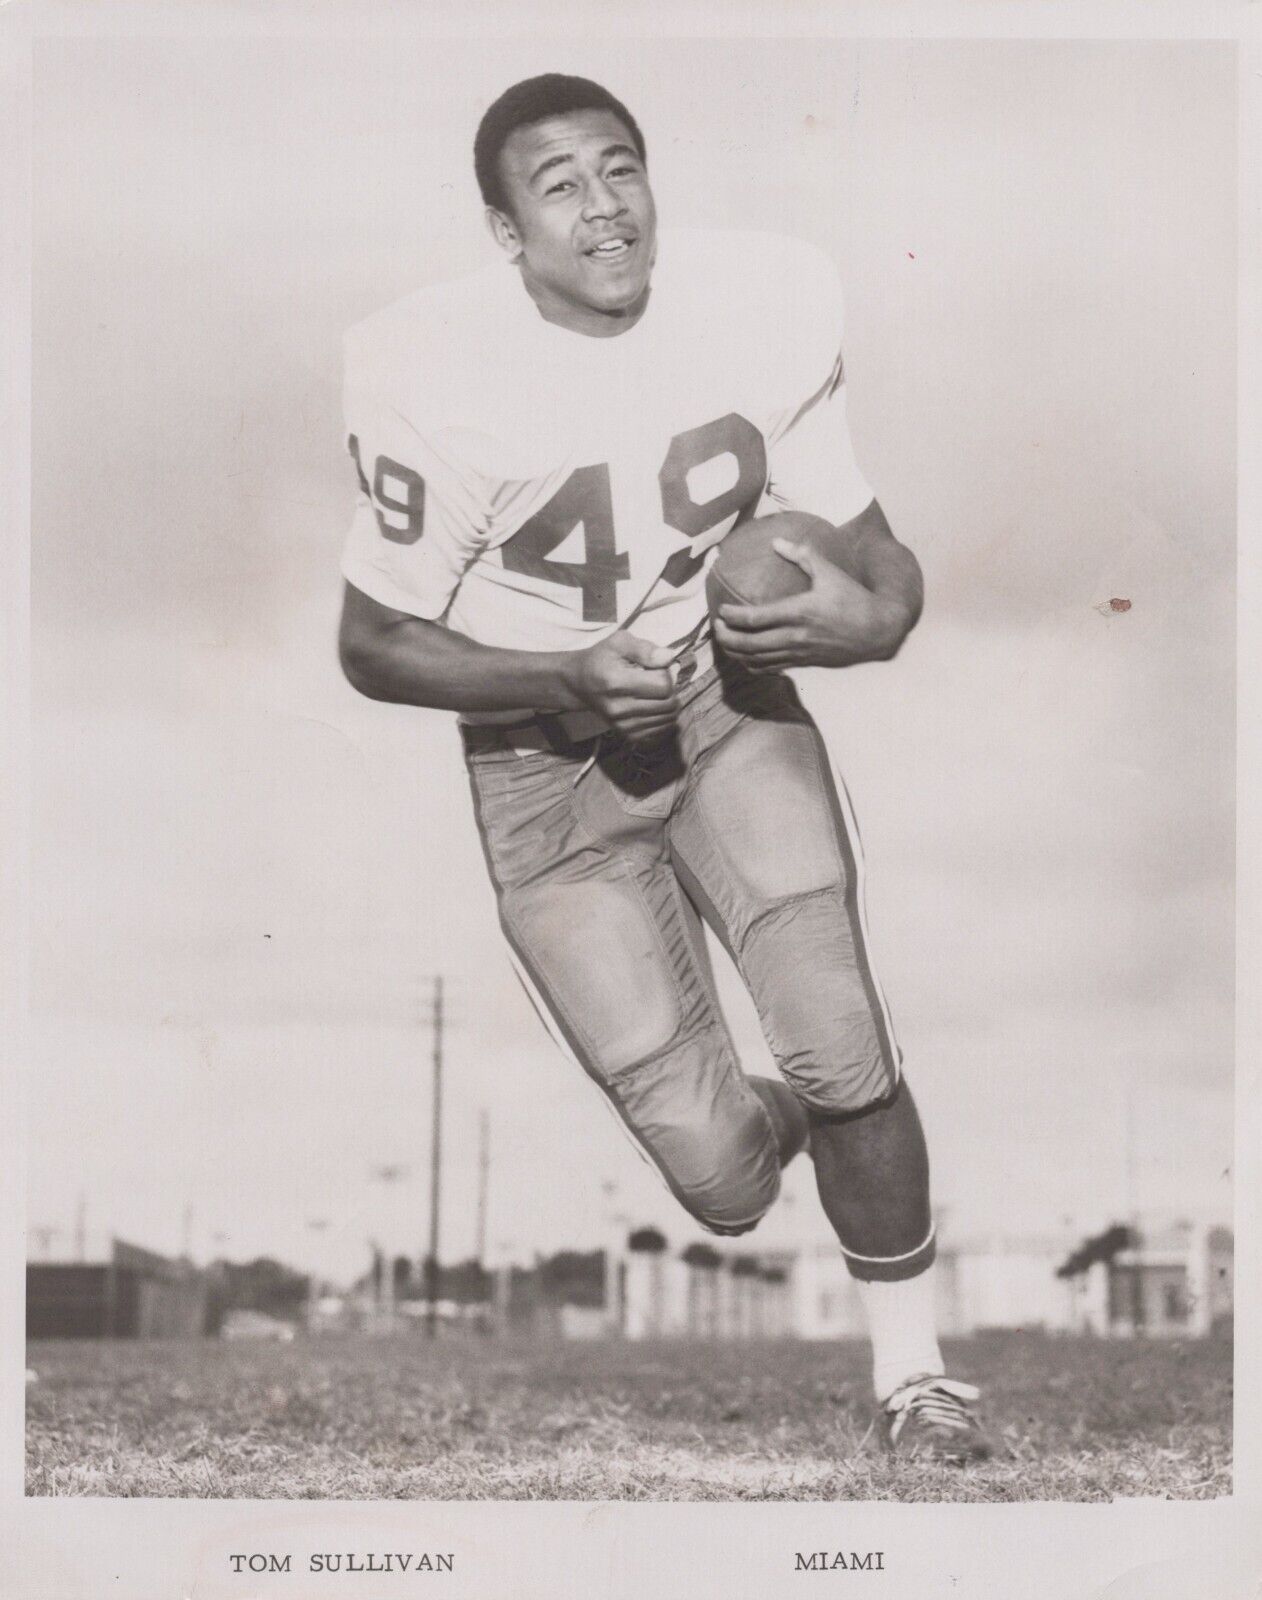 1969 TOM SULLIVAN AMERICAN FOOTBALL PLAYER NFL MIAMI PORTRAIT PRESS Photo 218